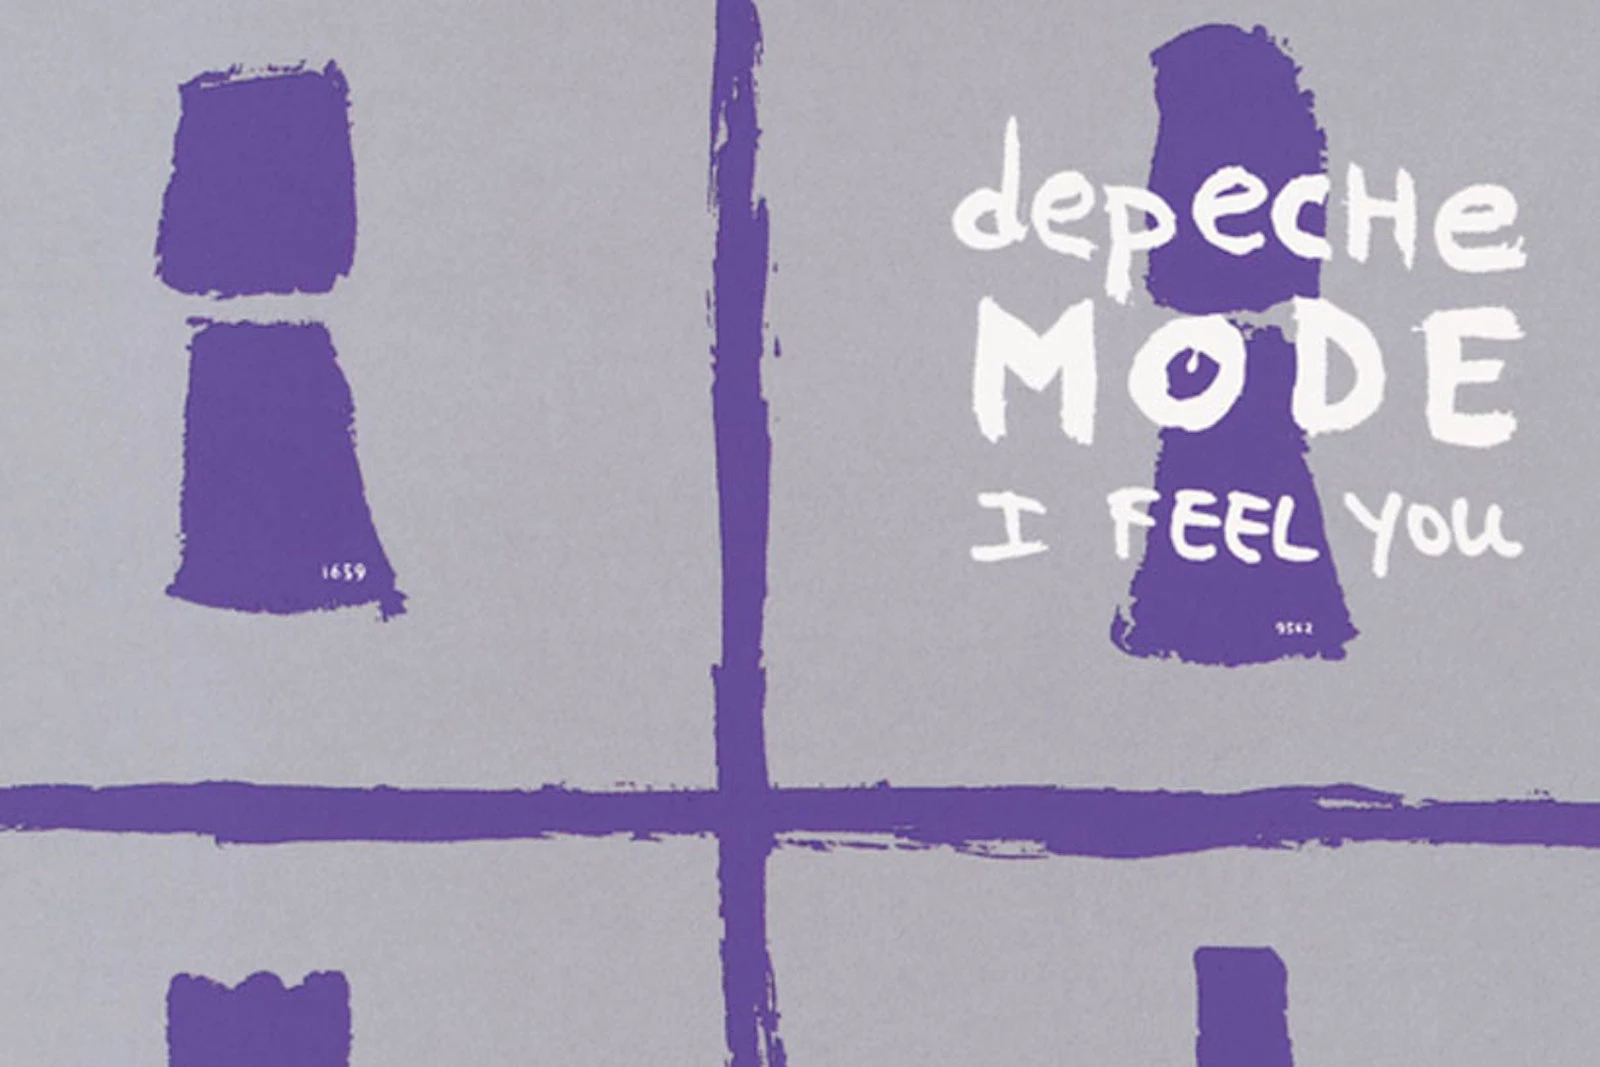 Depeche Mode Want Your Respect